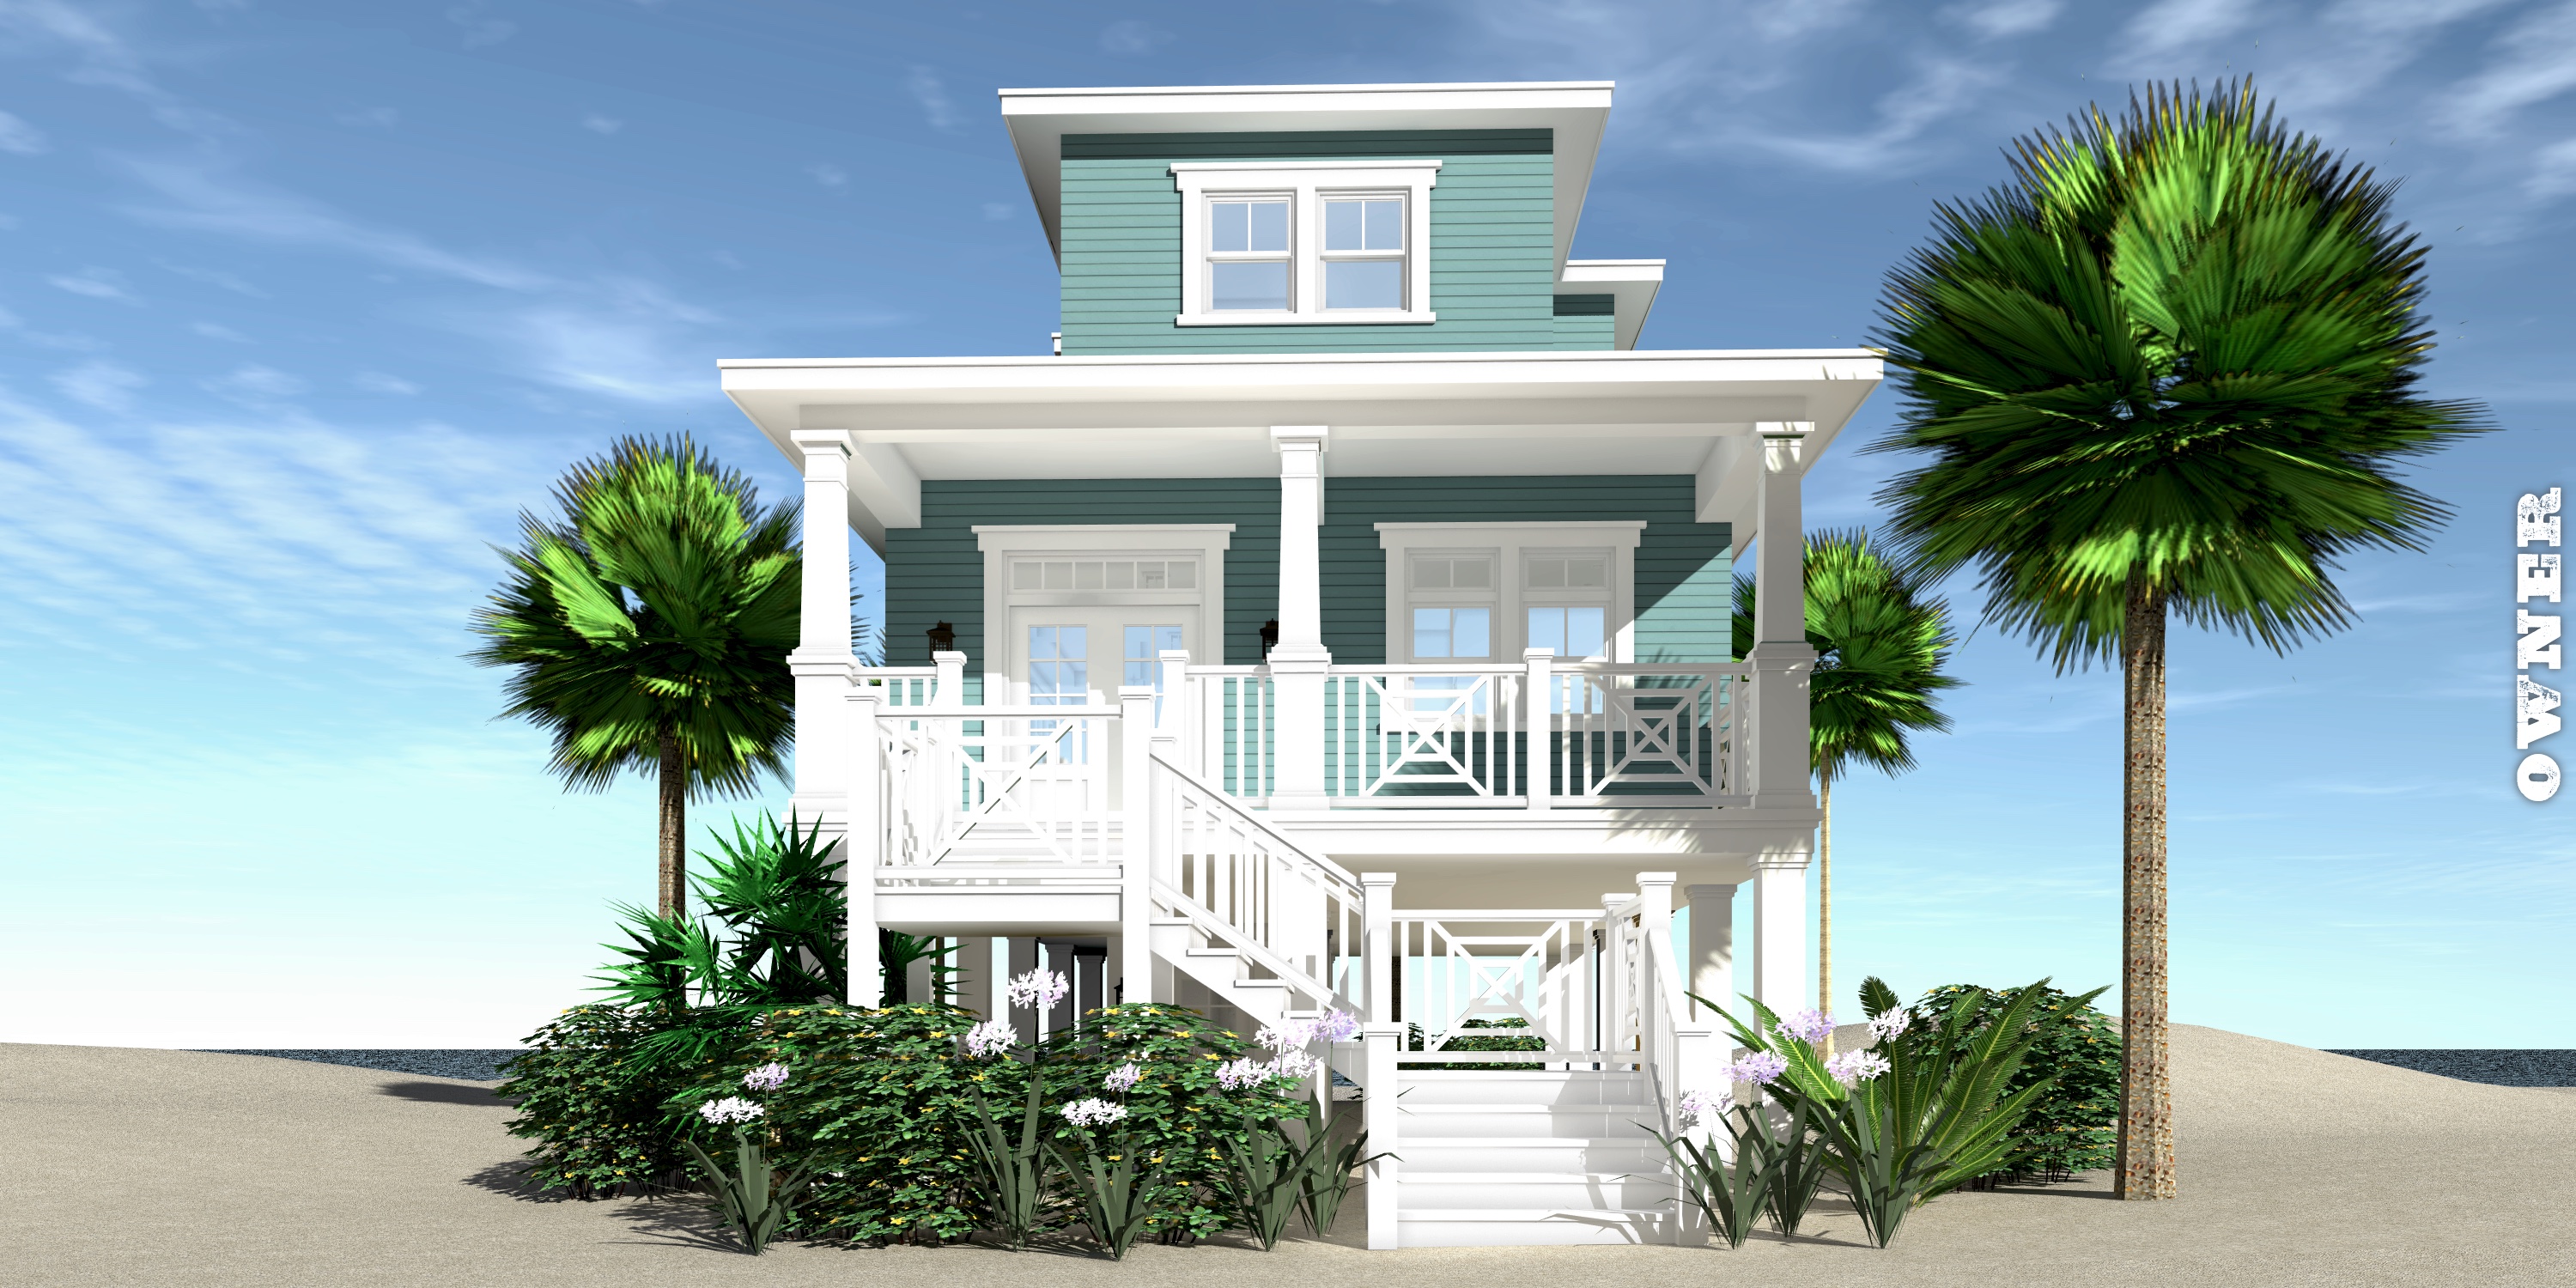 3 Bedroom Beach  House  Plan  with Storage Below Tyree House  